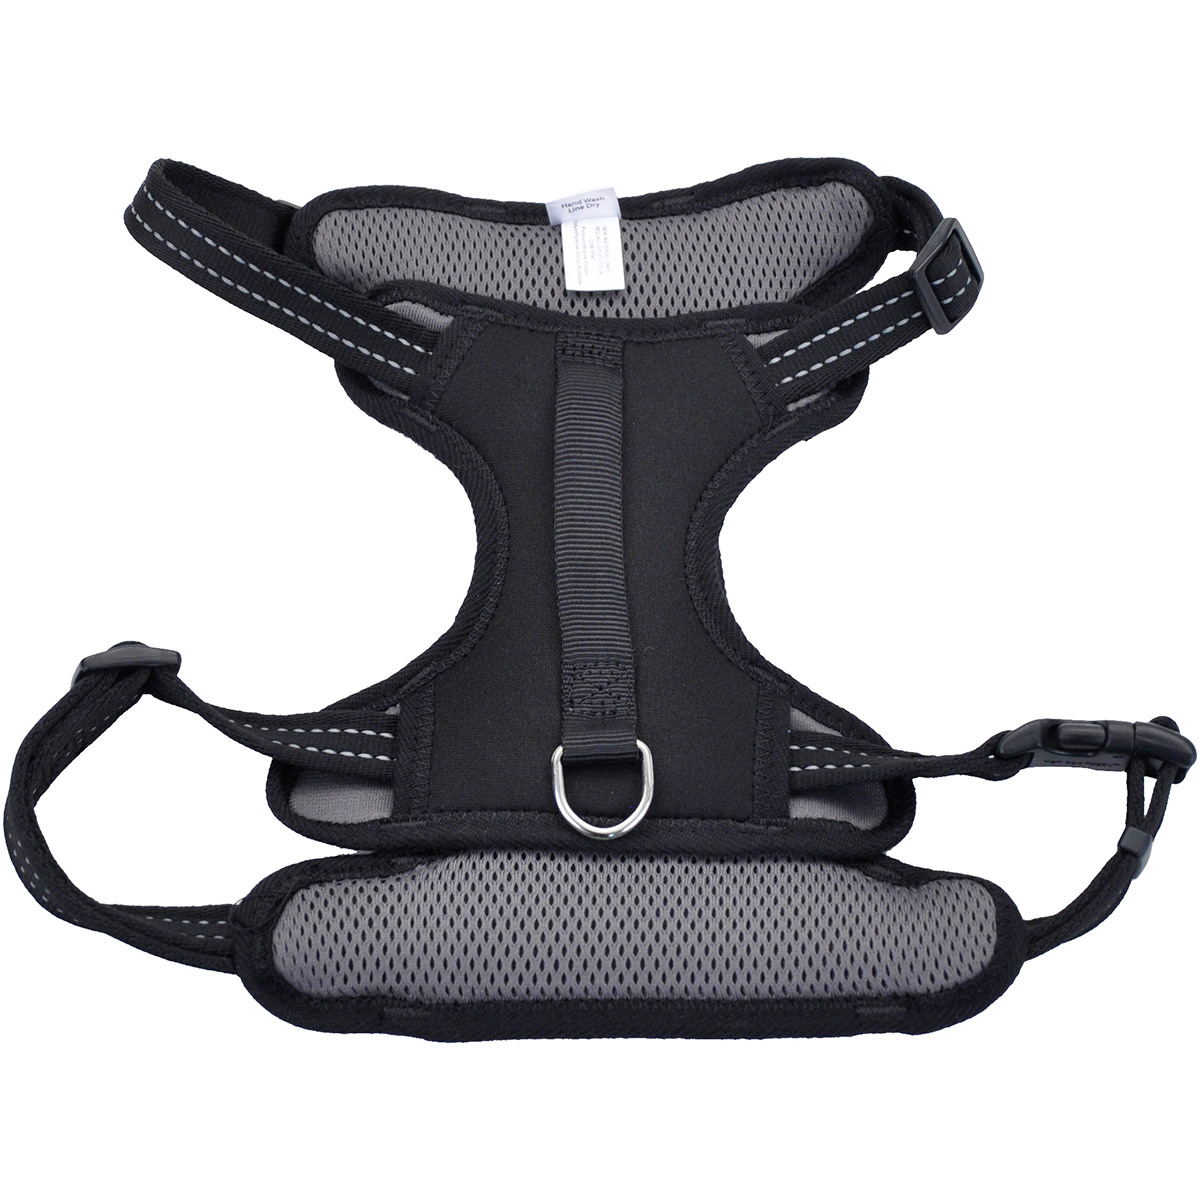 06689bkl Control Handle Harness, Black - Large